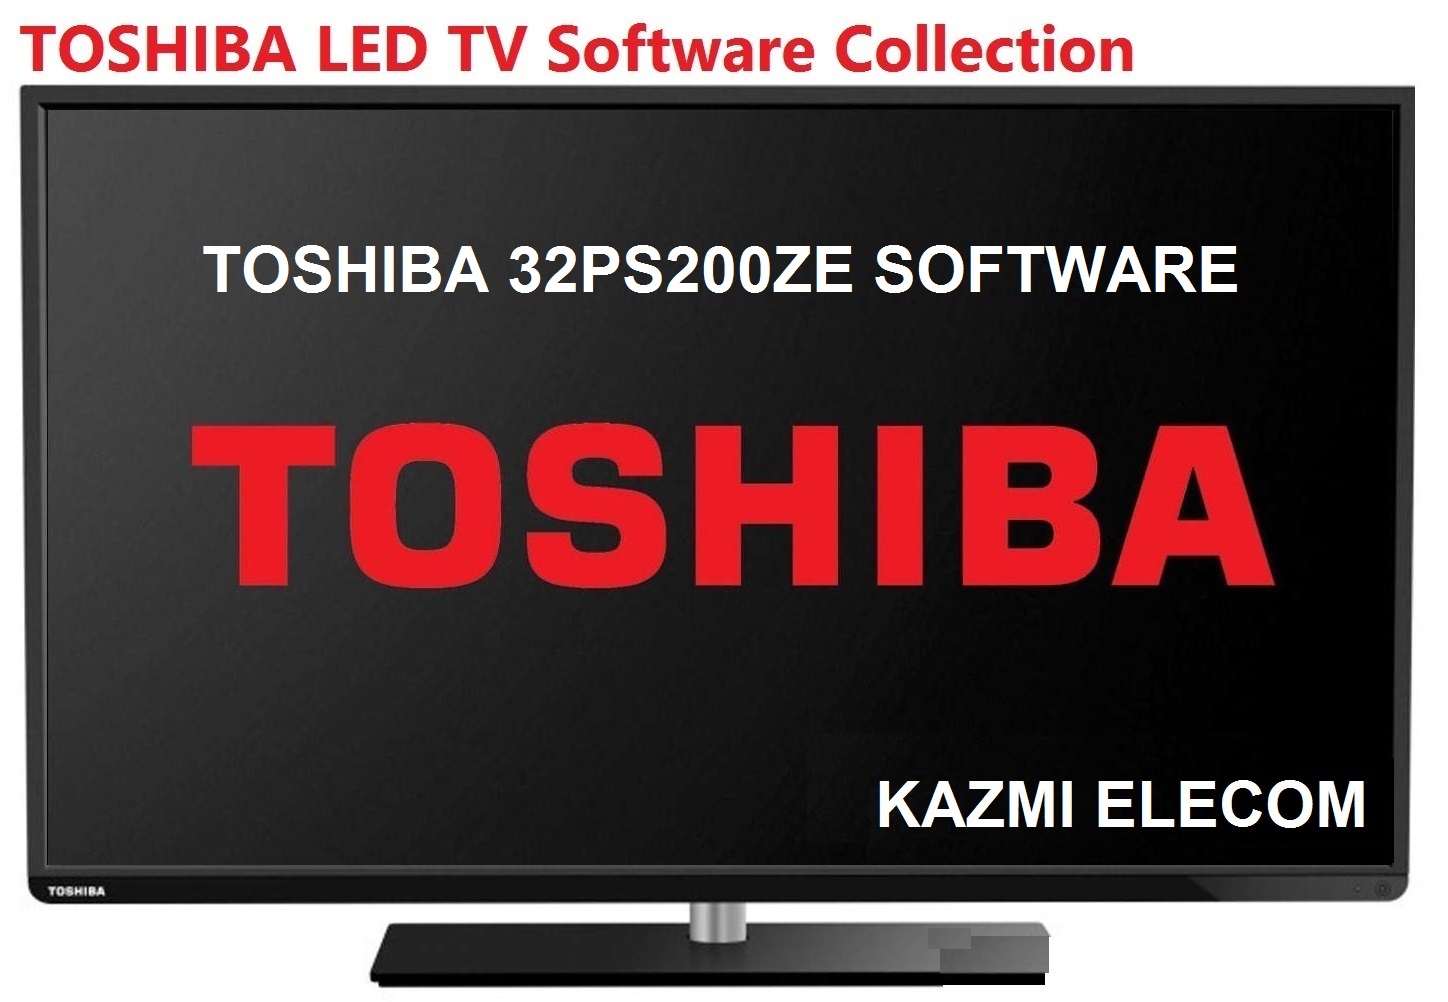 Toshiba 32Ps200Ze